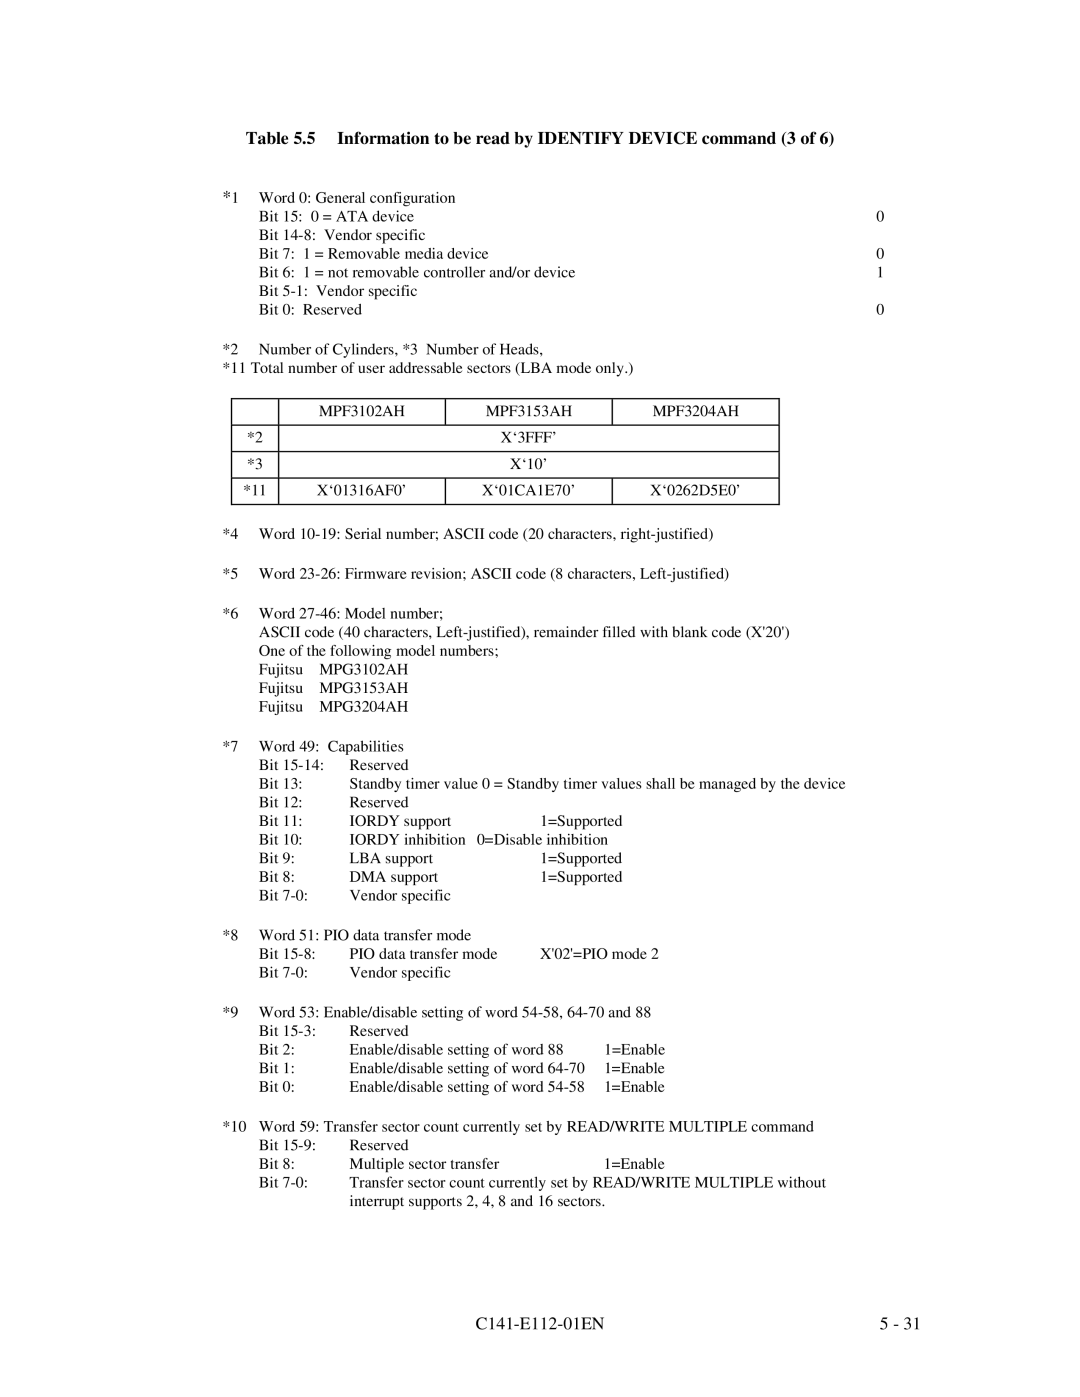 Fujitsu MPG3XXXAH manual 5 Information to be read by IDENTIFY DEVICE command 3 of, X‘3FFF’, X‘01CA1E70’ 